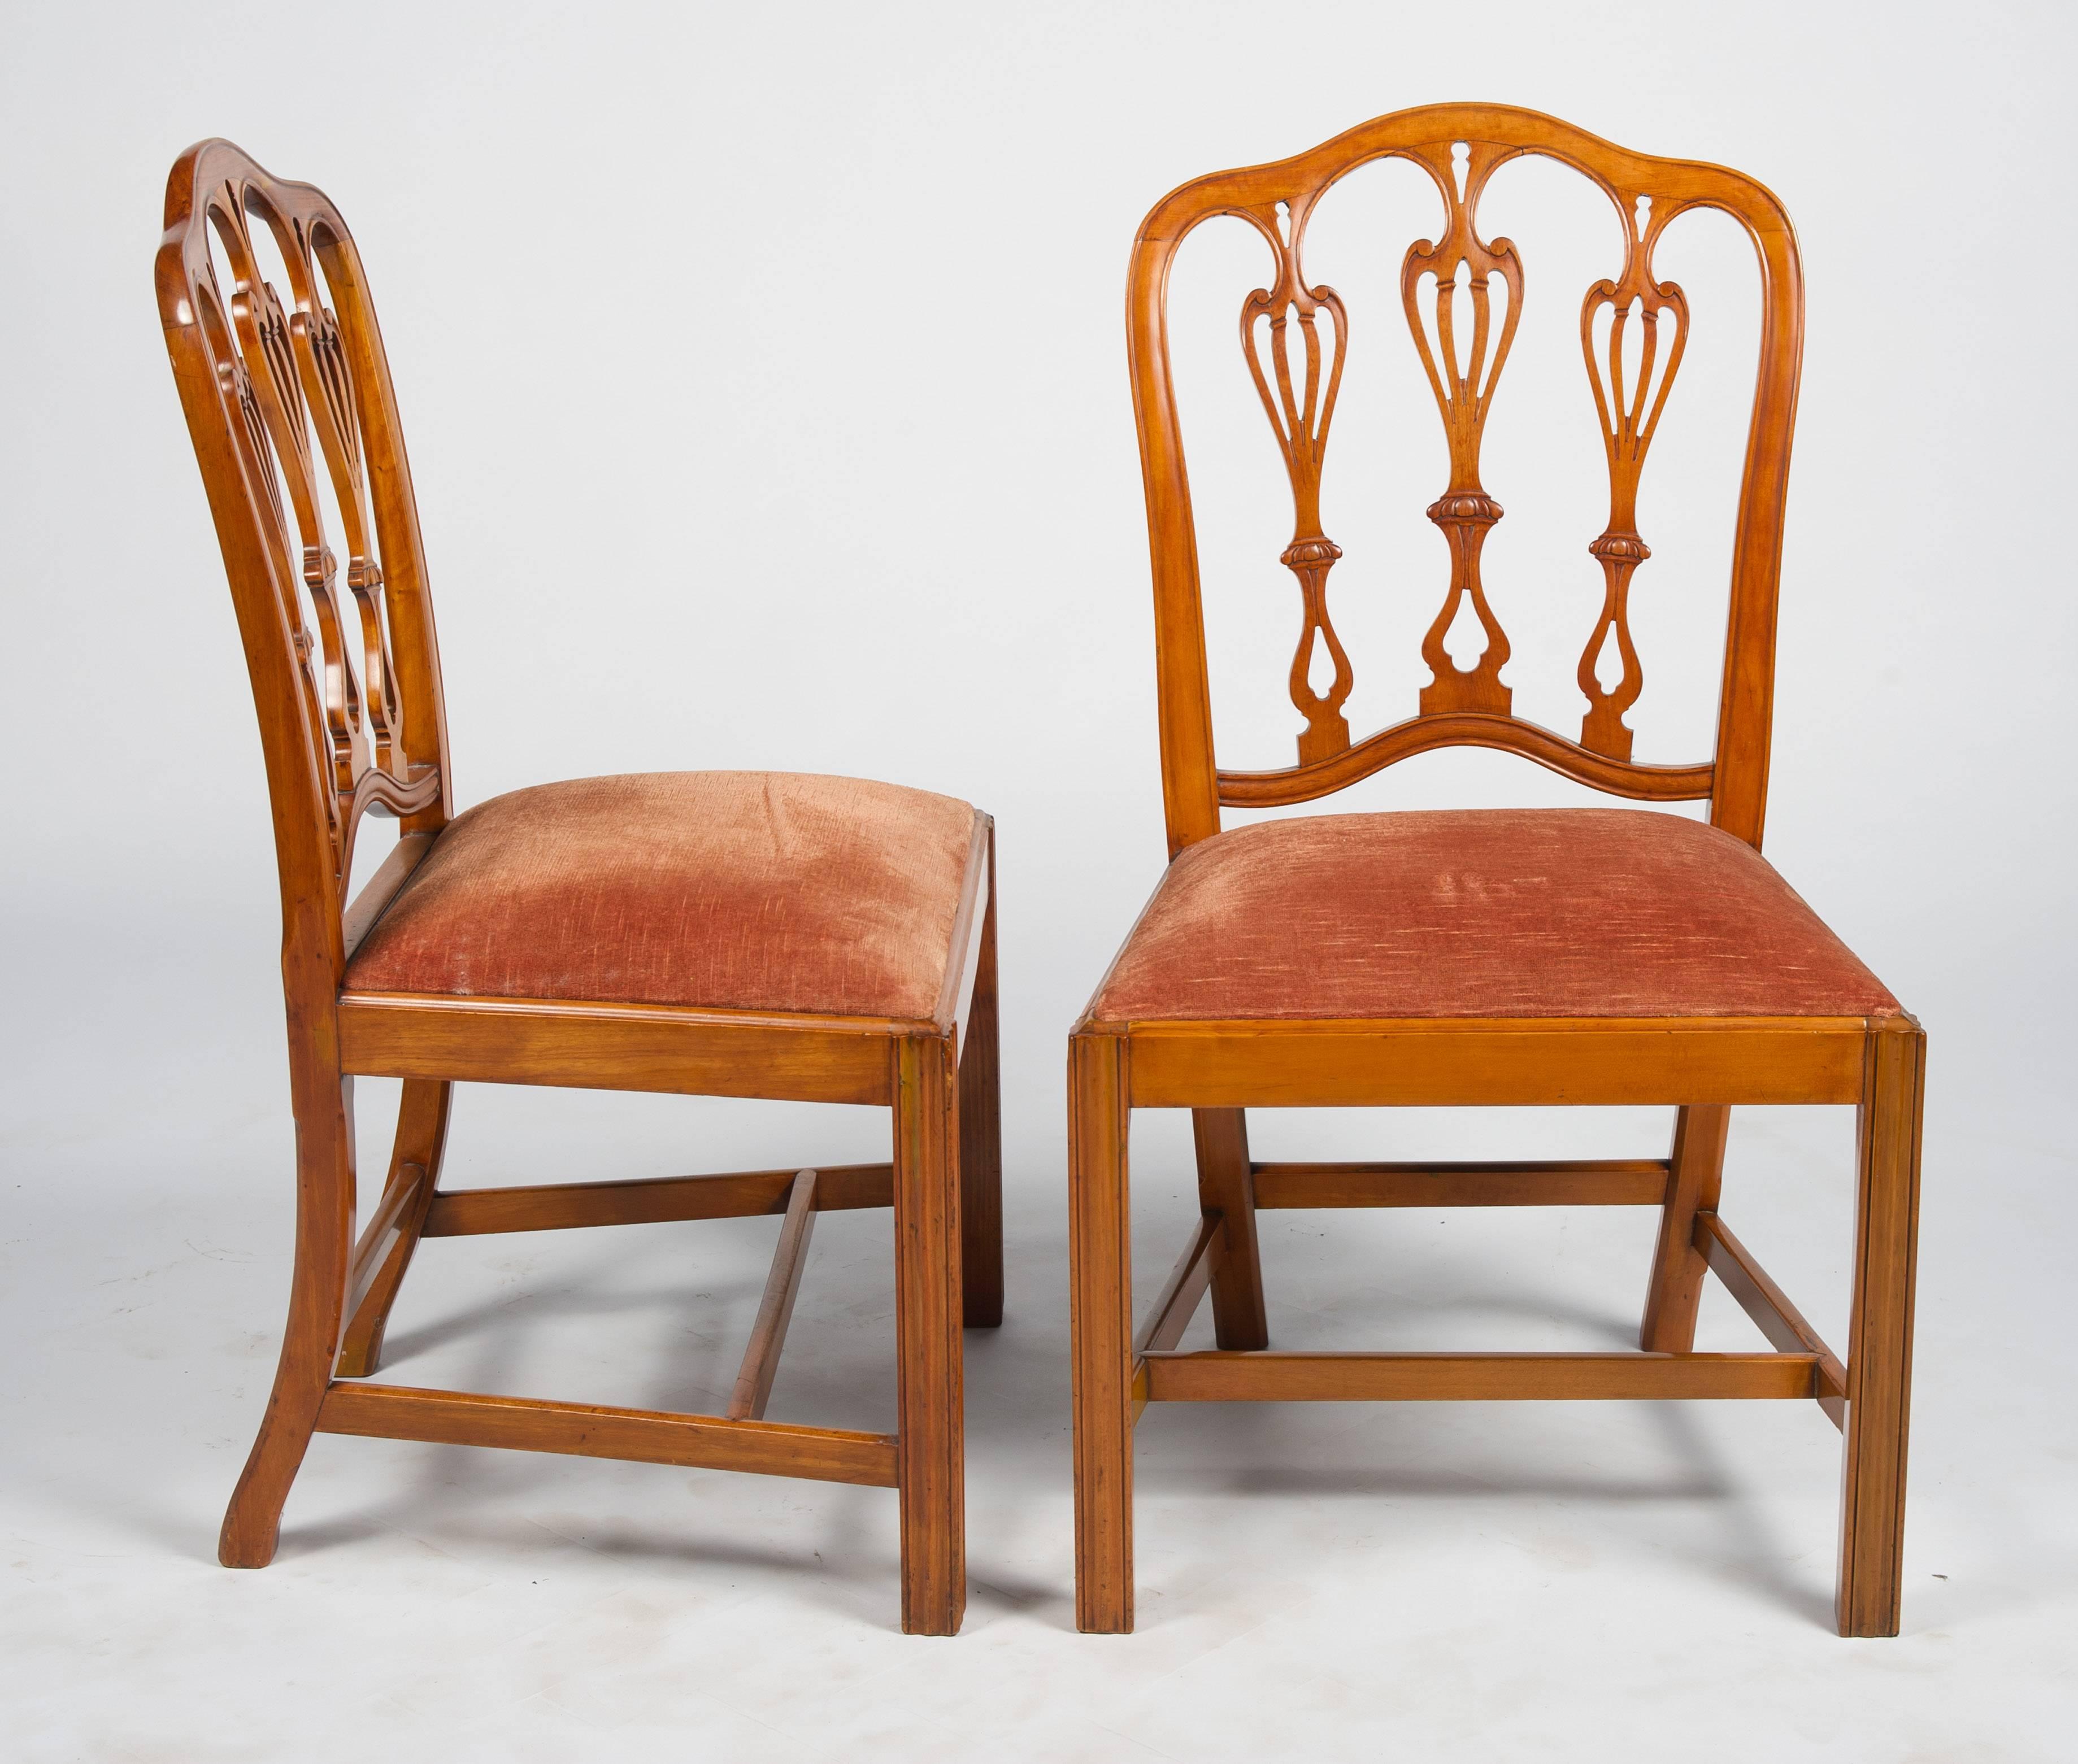 English Rare Pair of George II Period Satinwood Chairs